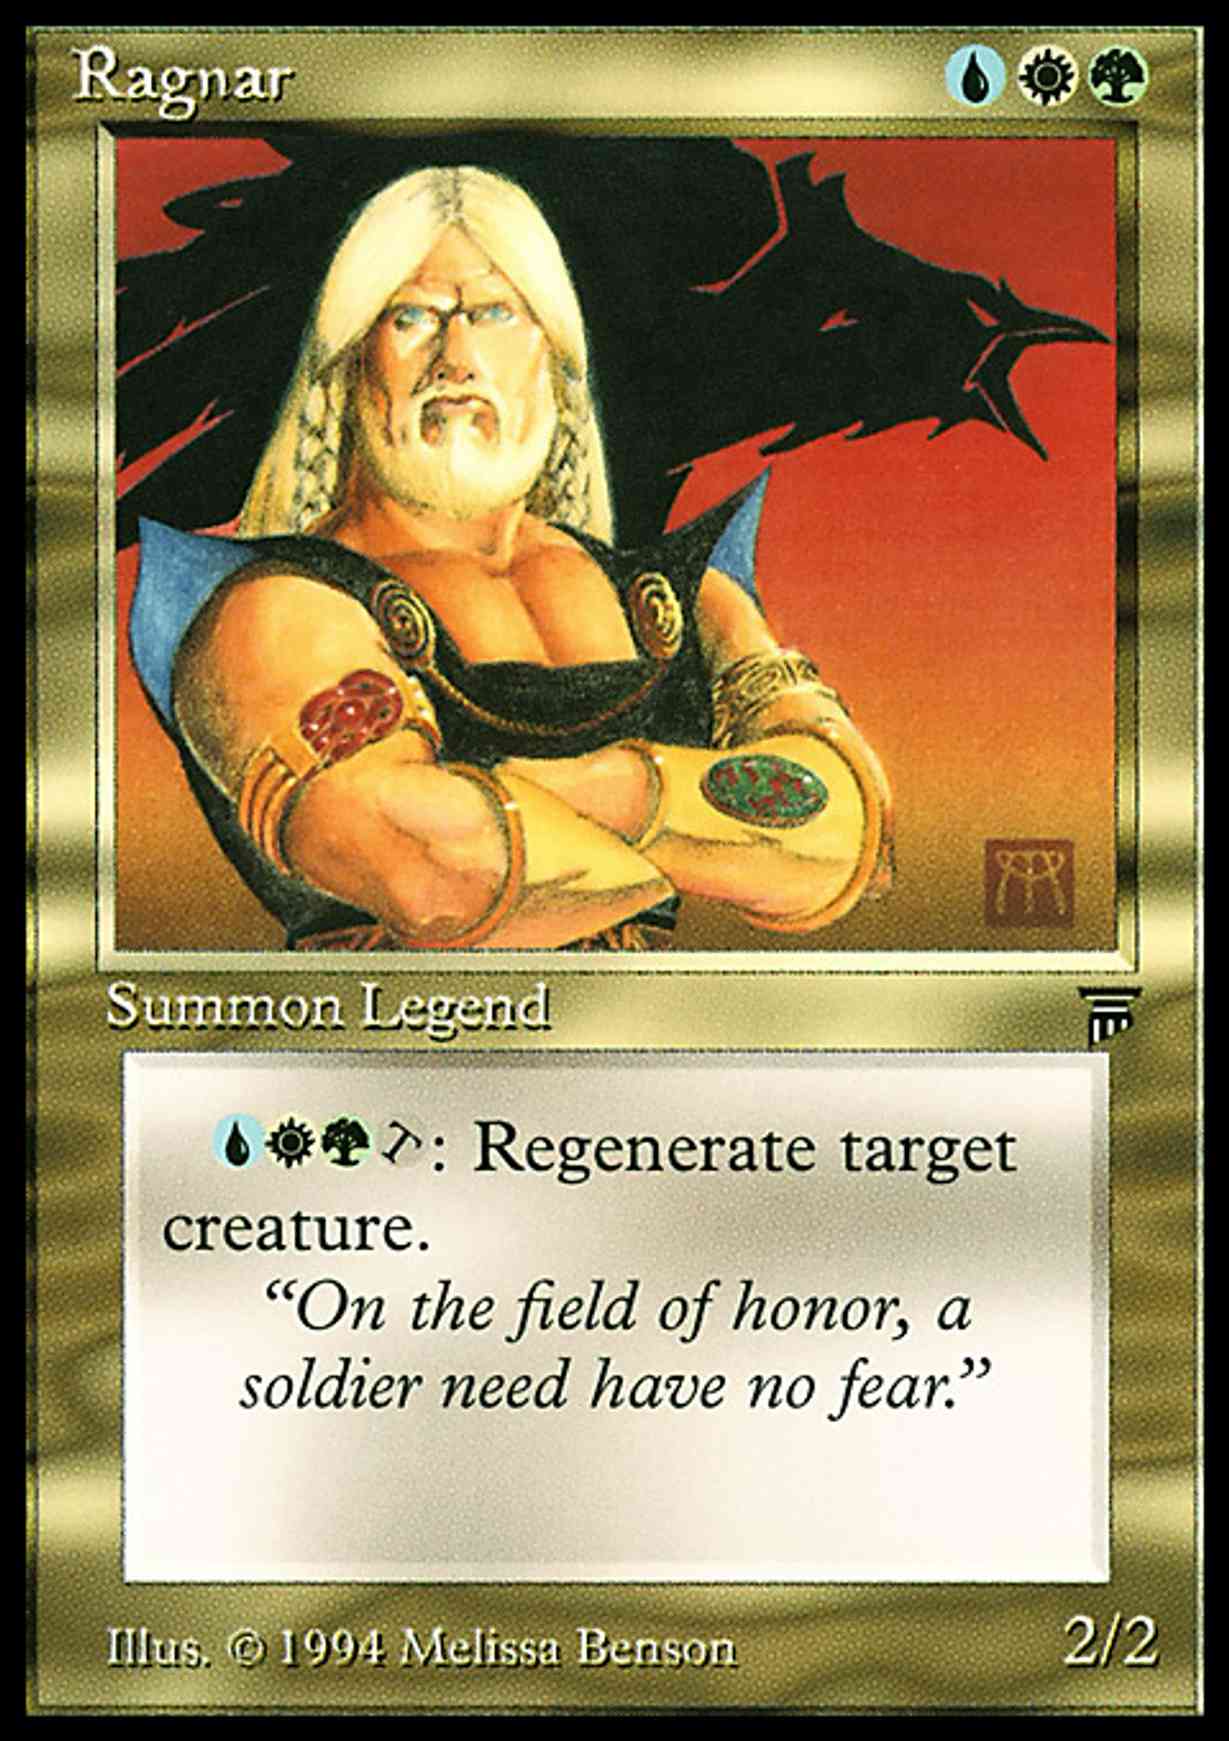 Ragnar magic card front